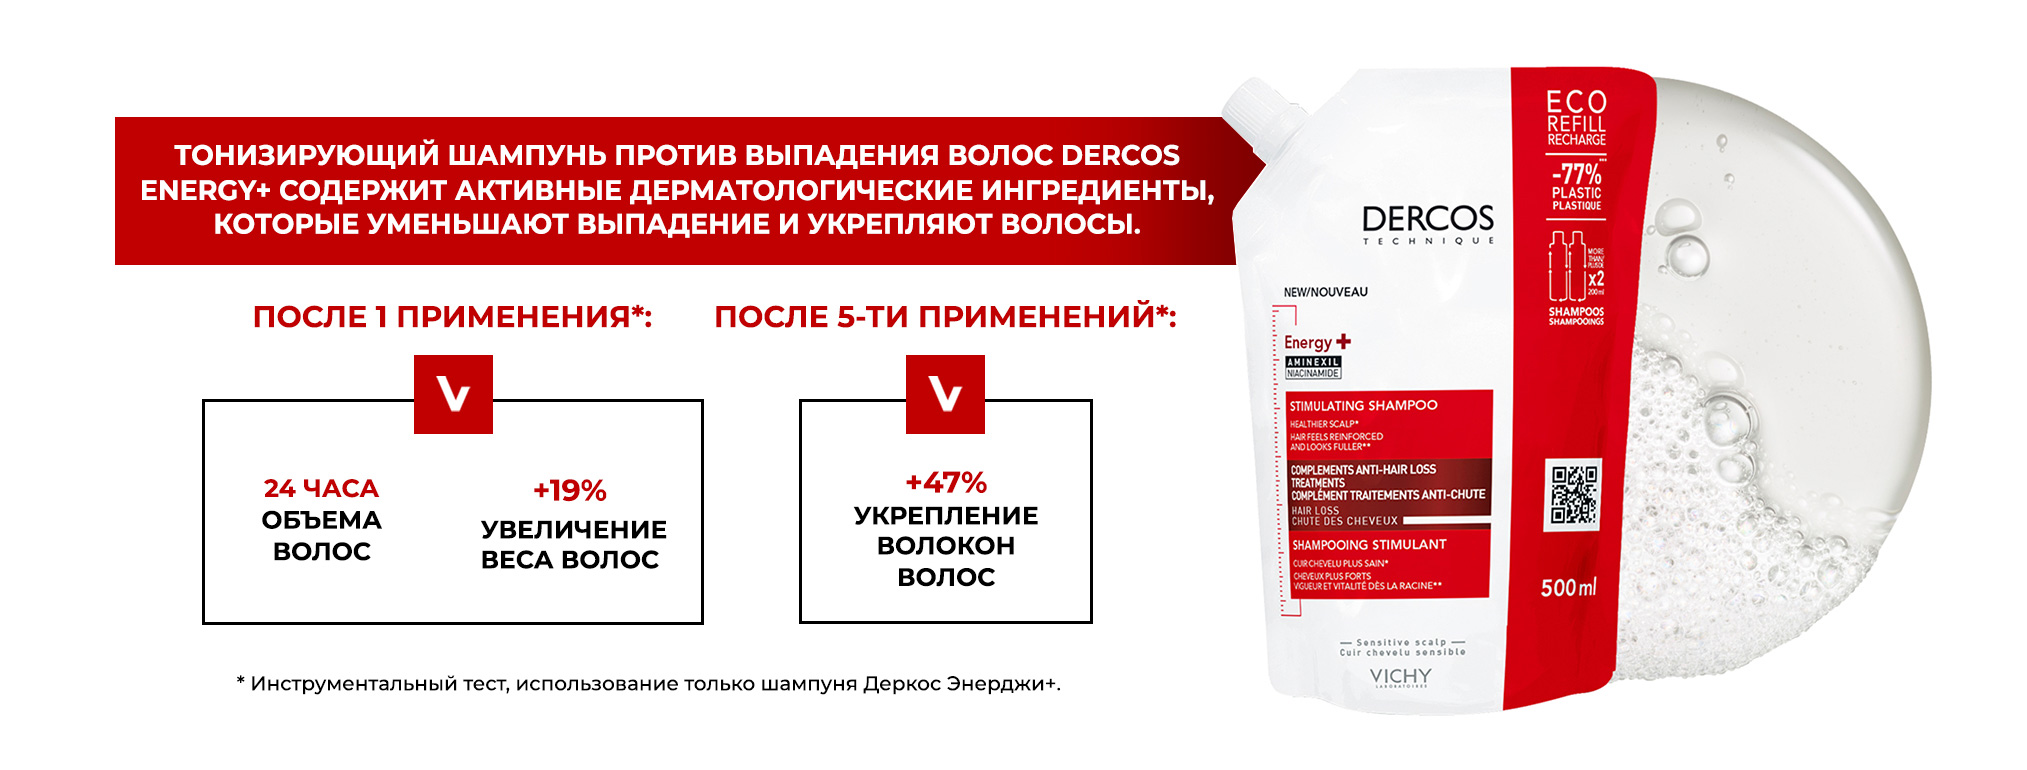 Vichy Dercos Energy+ Stimulating Shampoo (сменный блок)